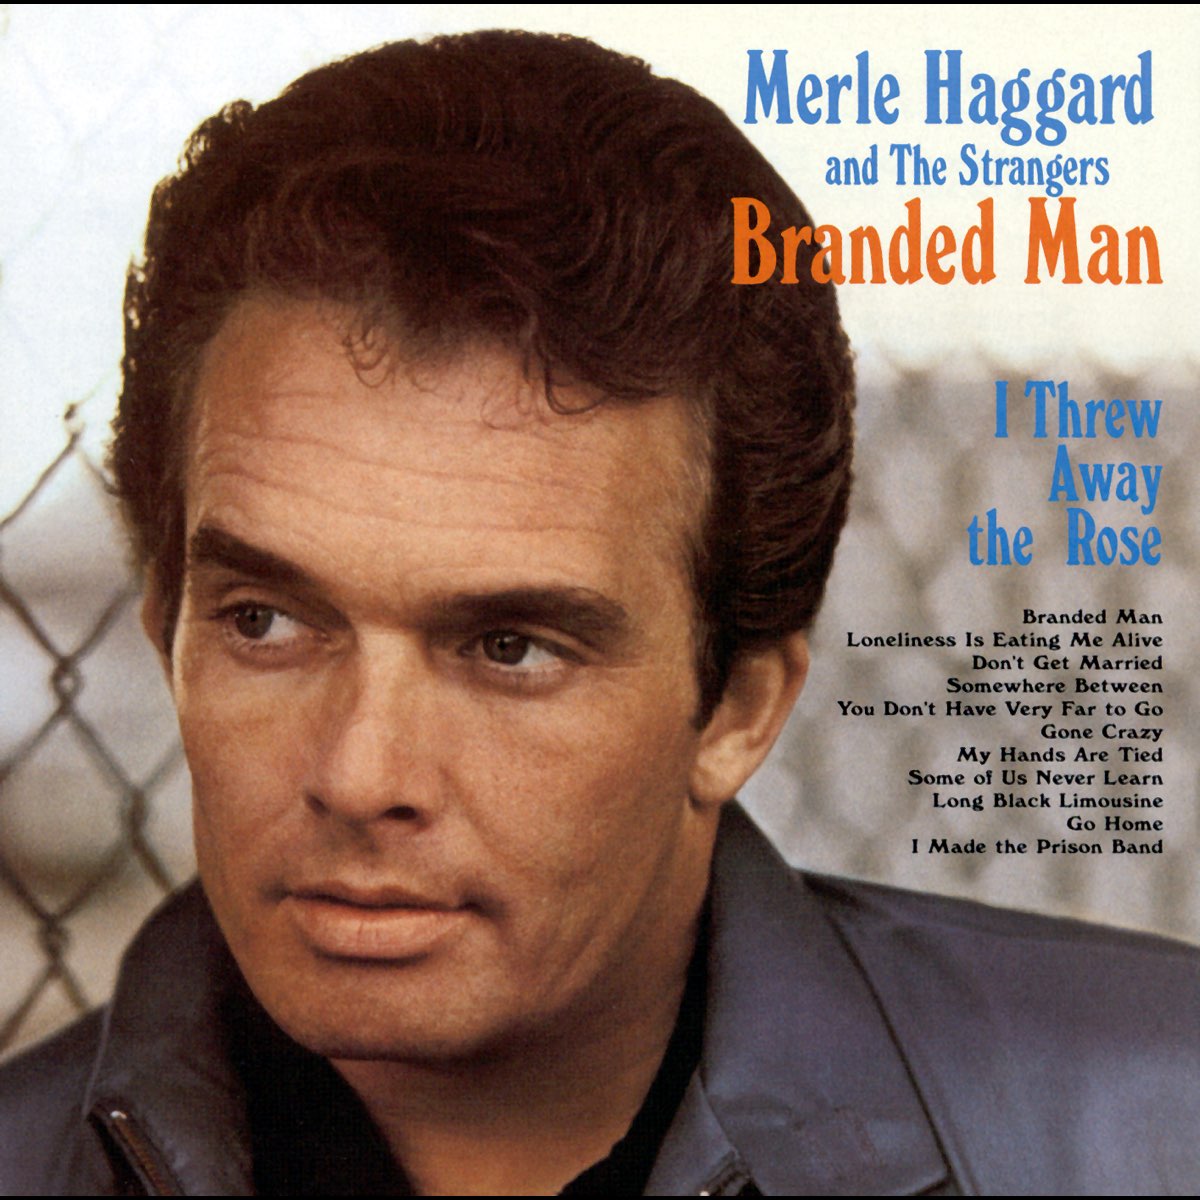 ‎Branded Man - Album by Merle Haggard & The Strangers - Apple Music